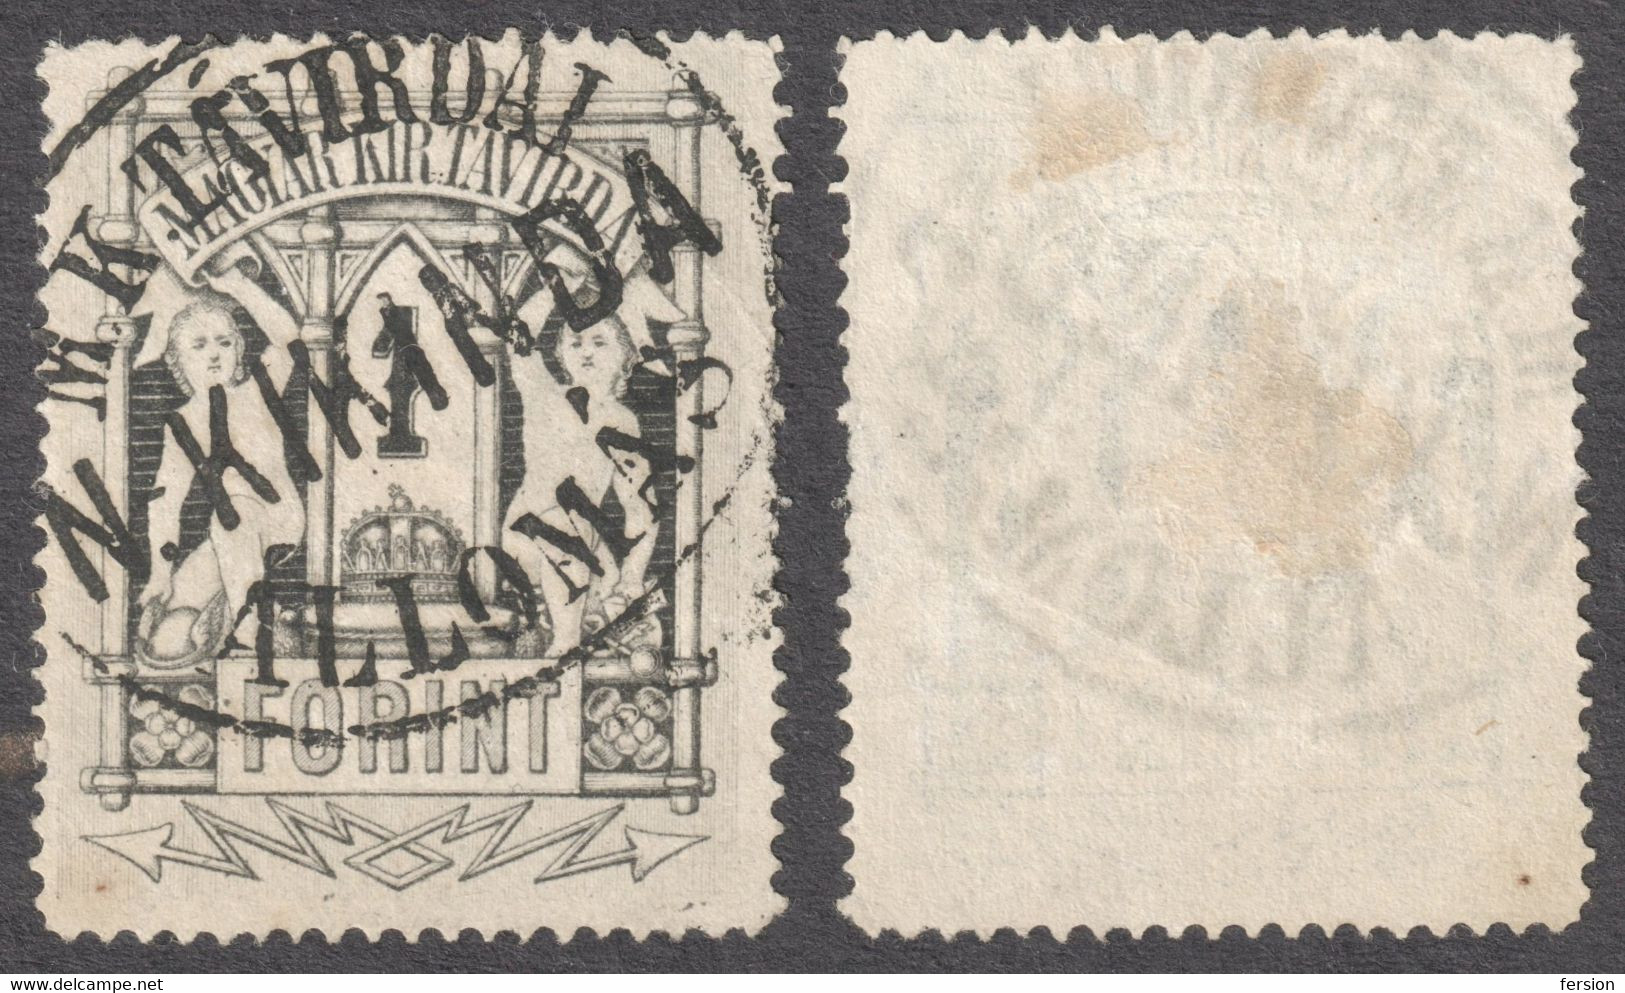 Kikinda Nagykikinda Postmark Serbia - TELEGRAPH Telegram TAX Stamp - 1873 HUNGARY - Copper Print 1 Ft - Used - Télégraphes